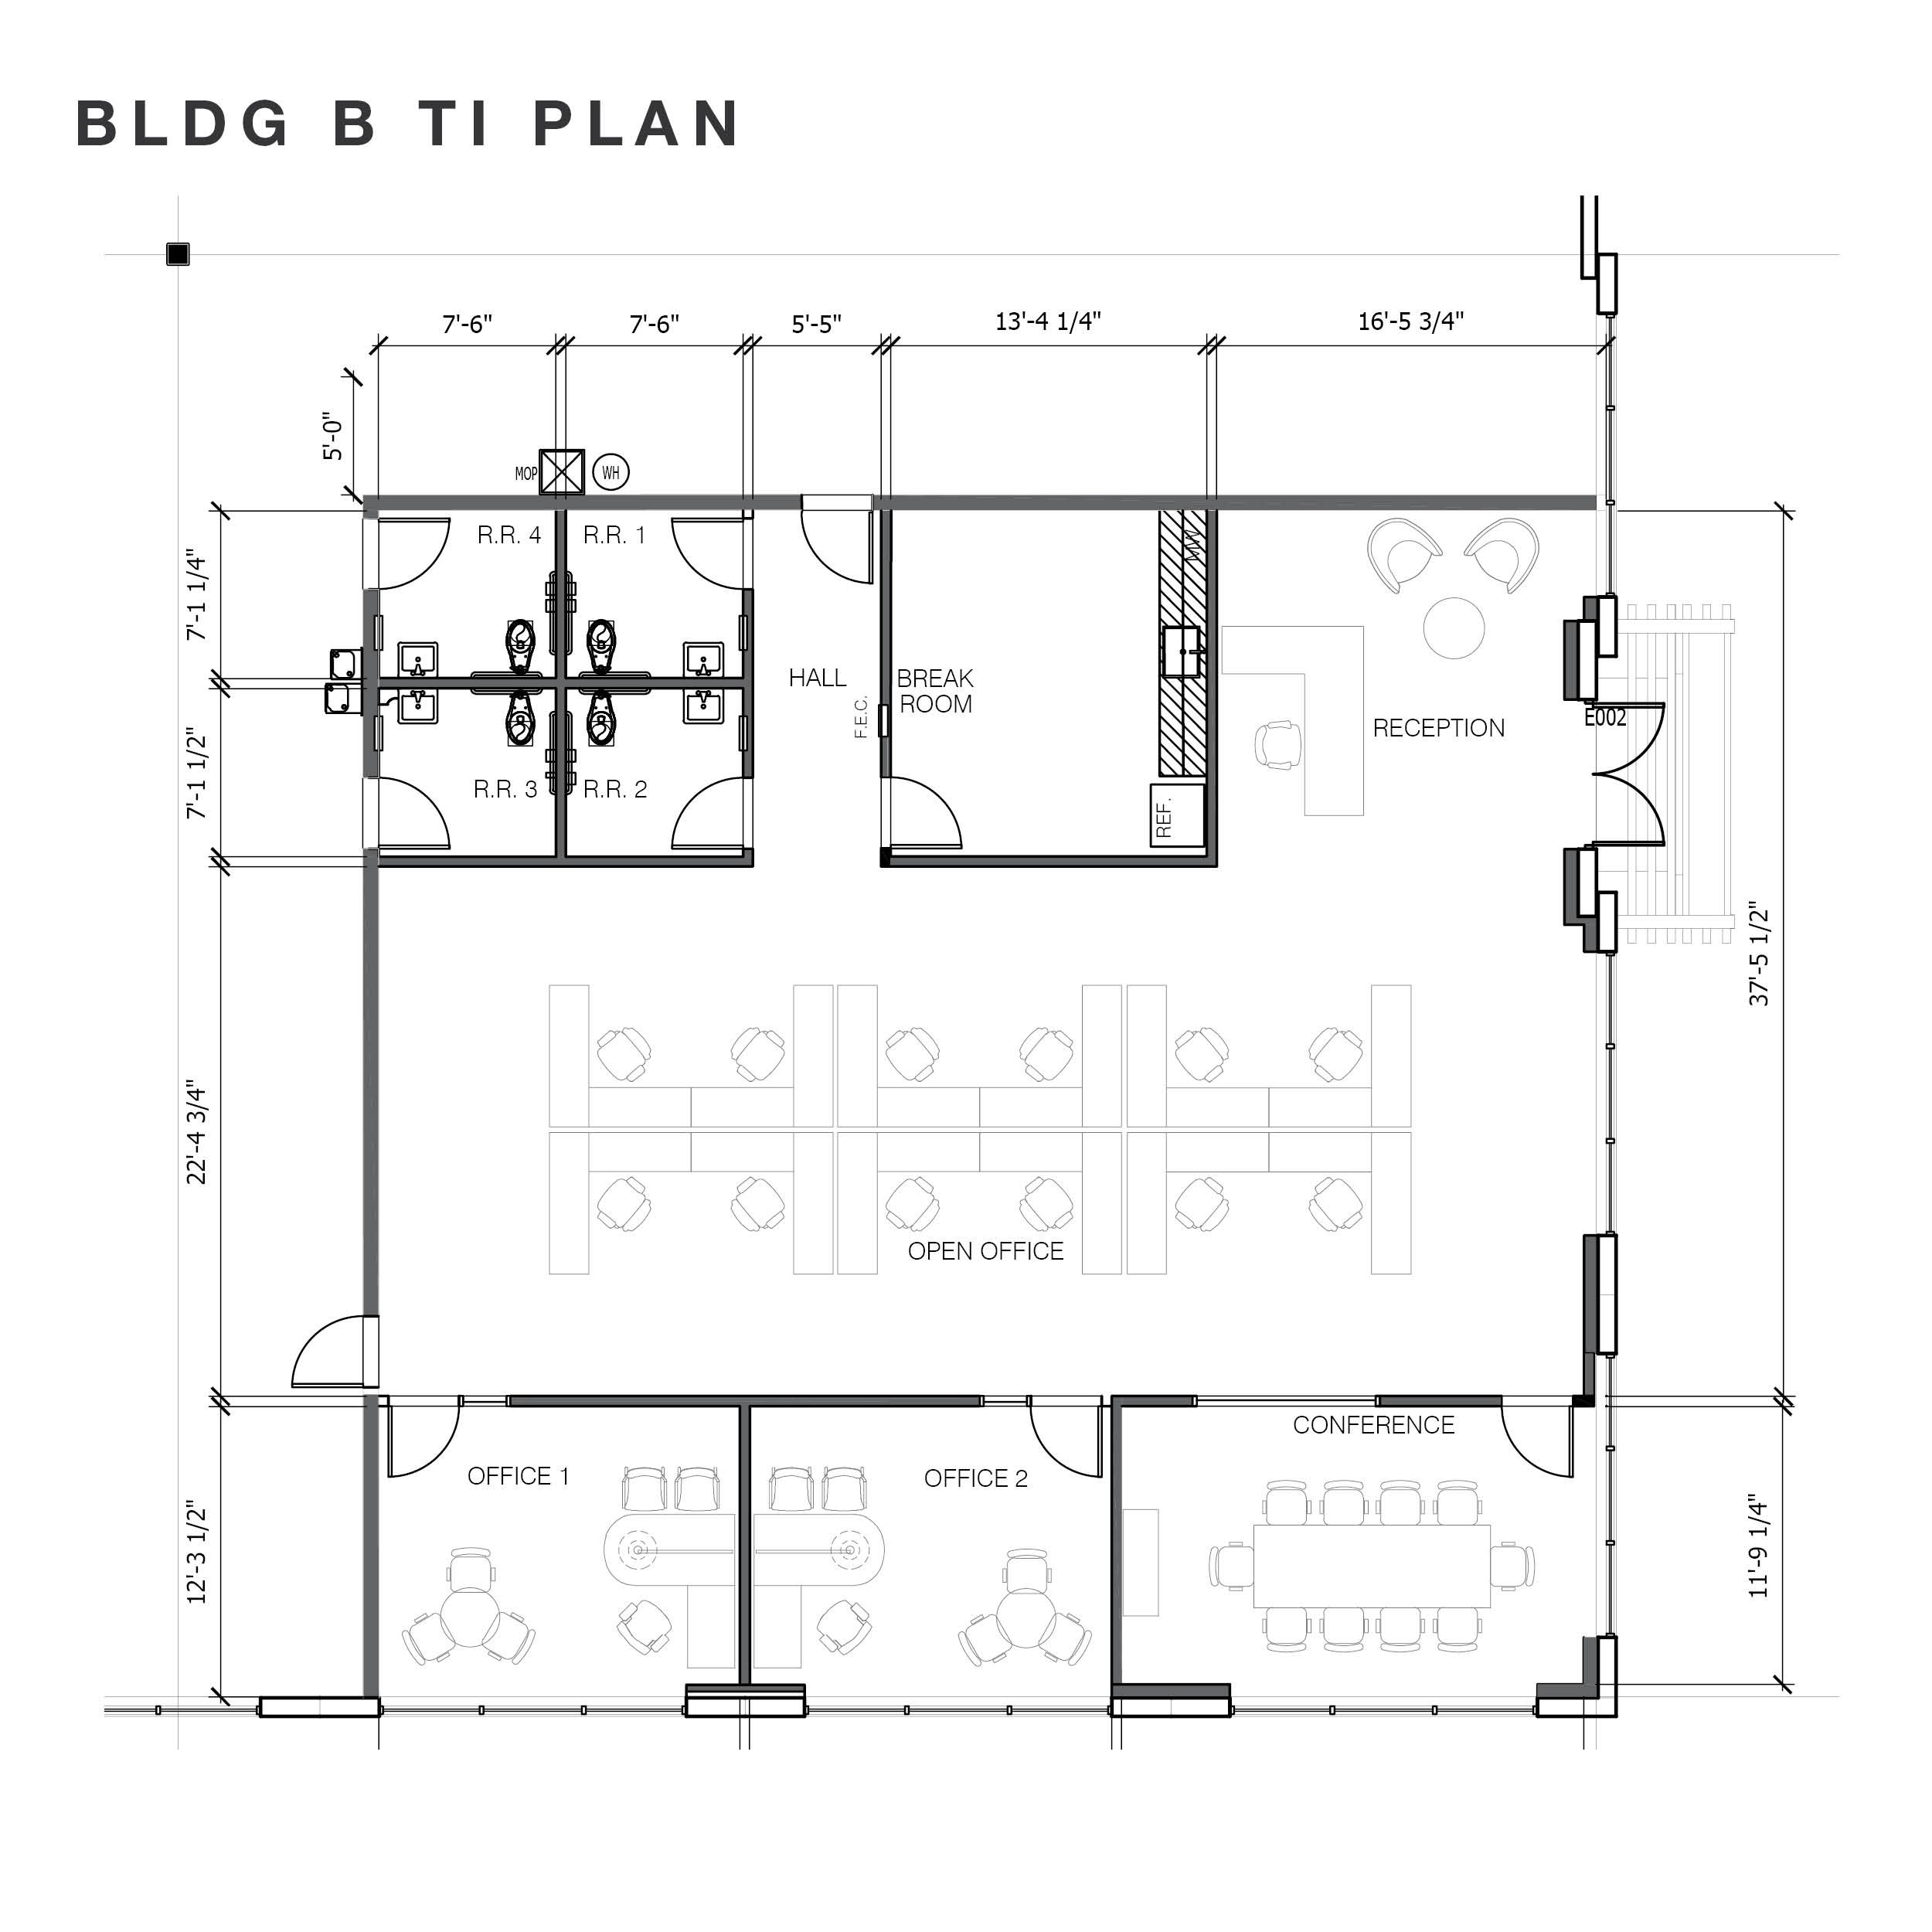 Building B TI Plan